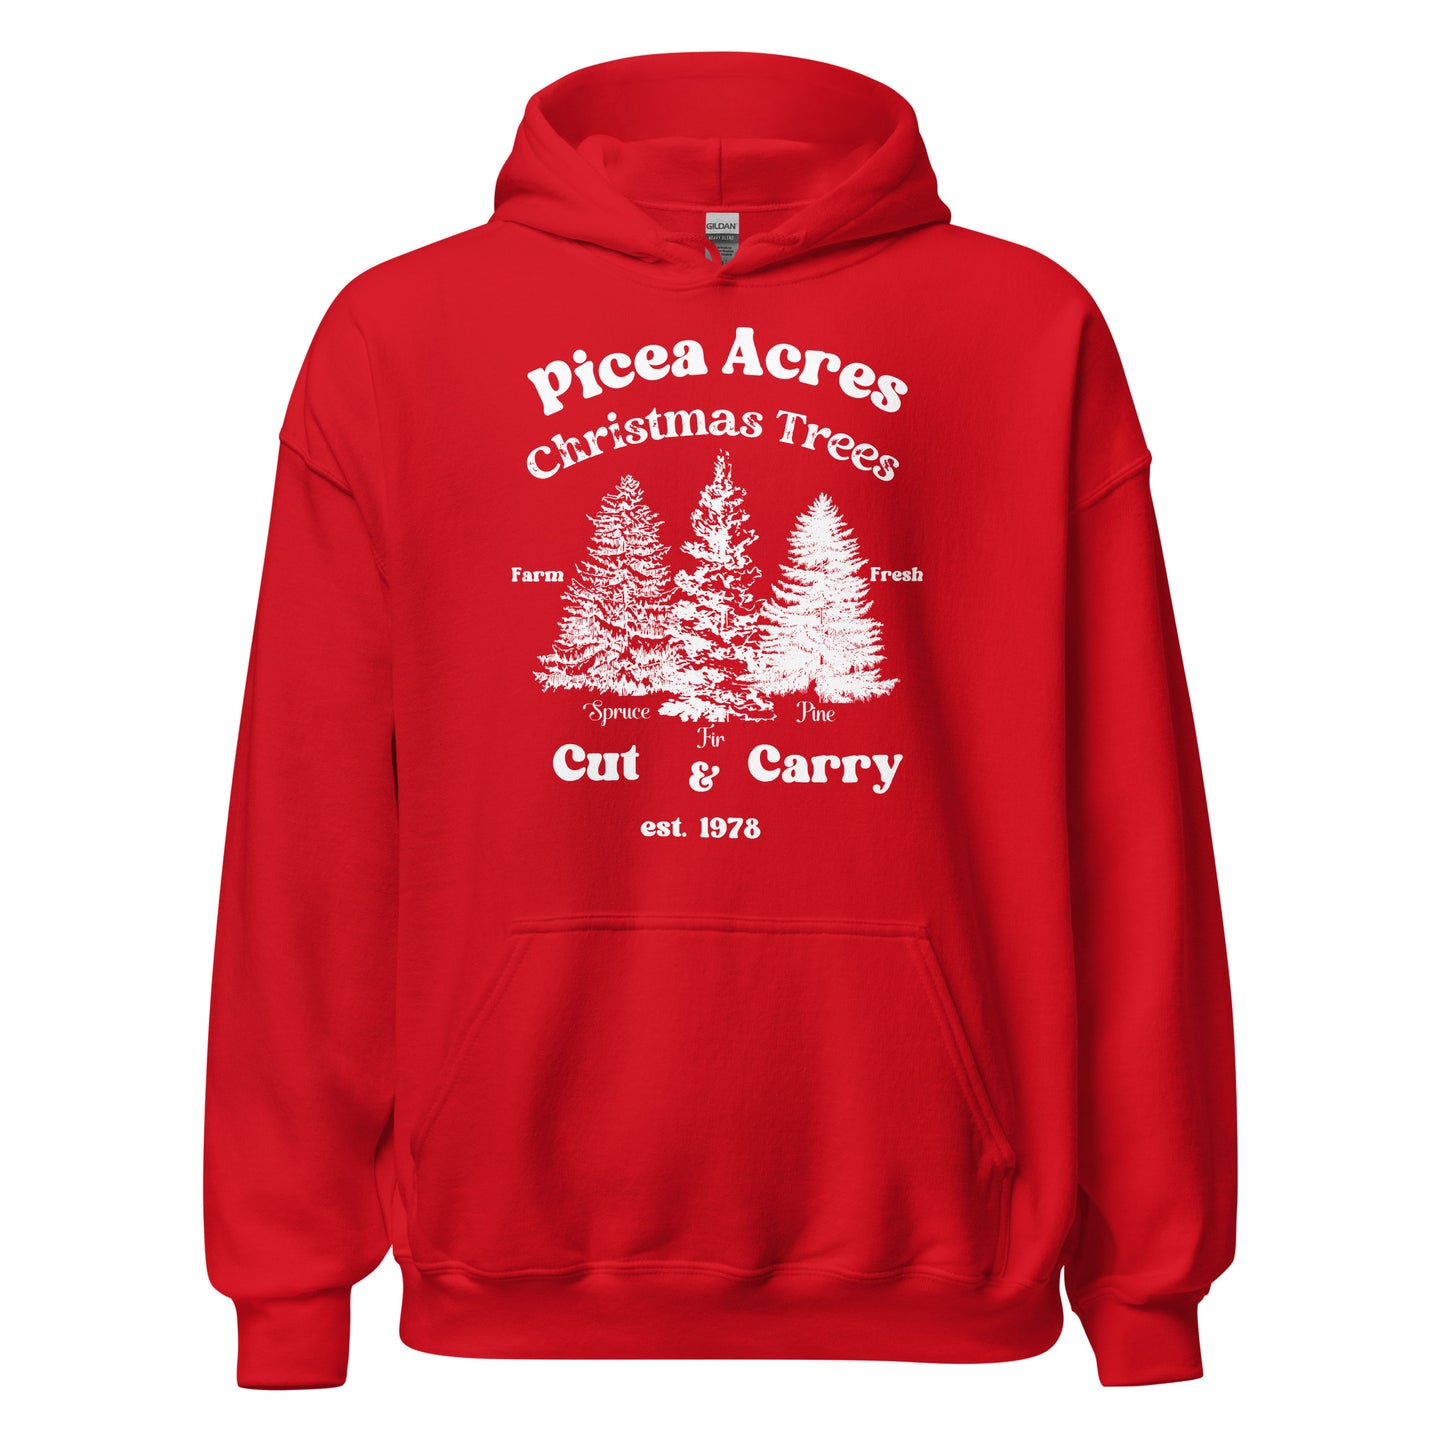 Picea Acres, Christmas Trees, Farm Fresh, Cut & Carry Unisex Hoodie Sweatshirt